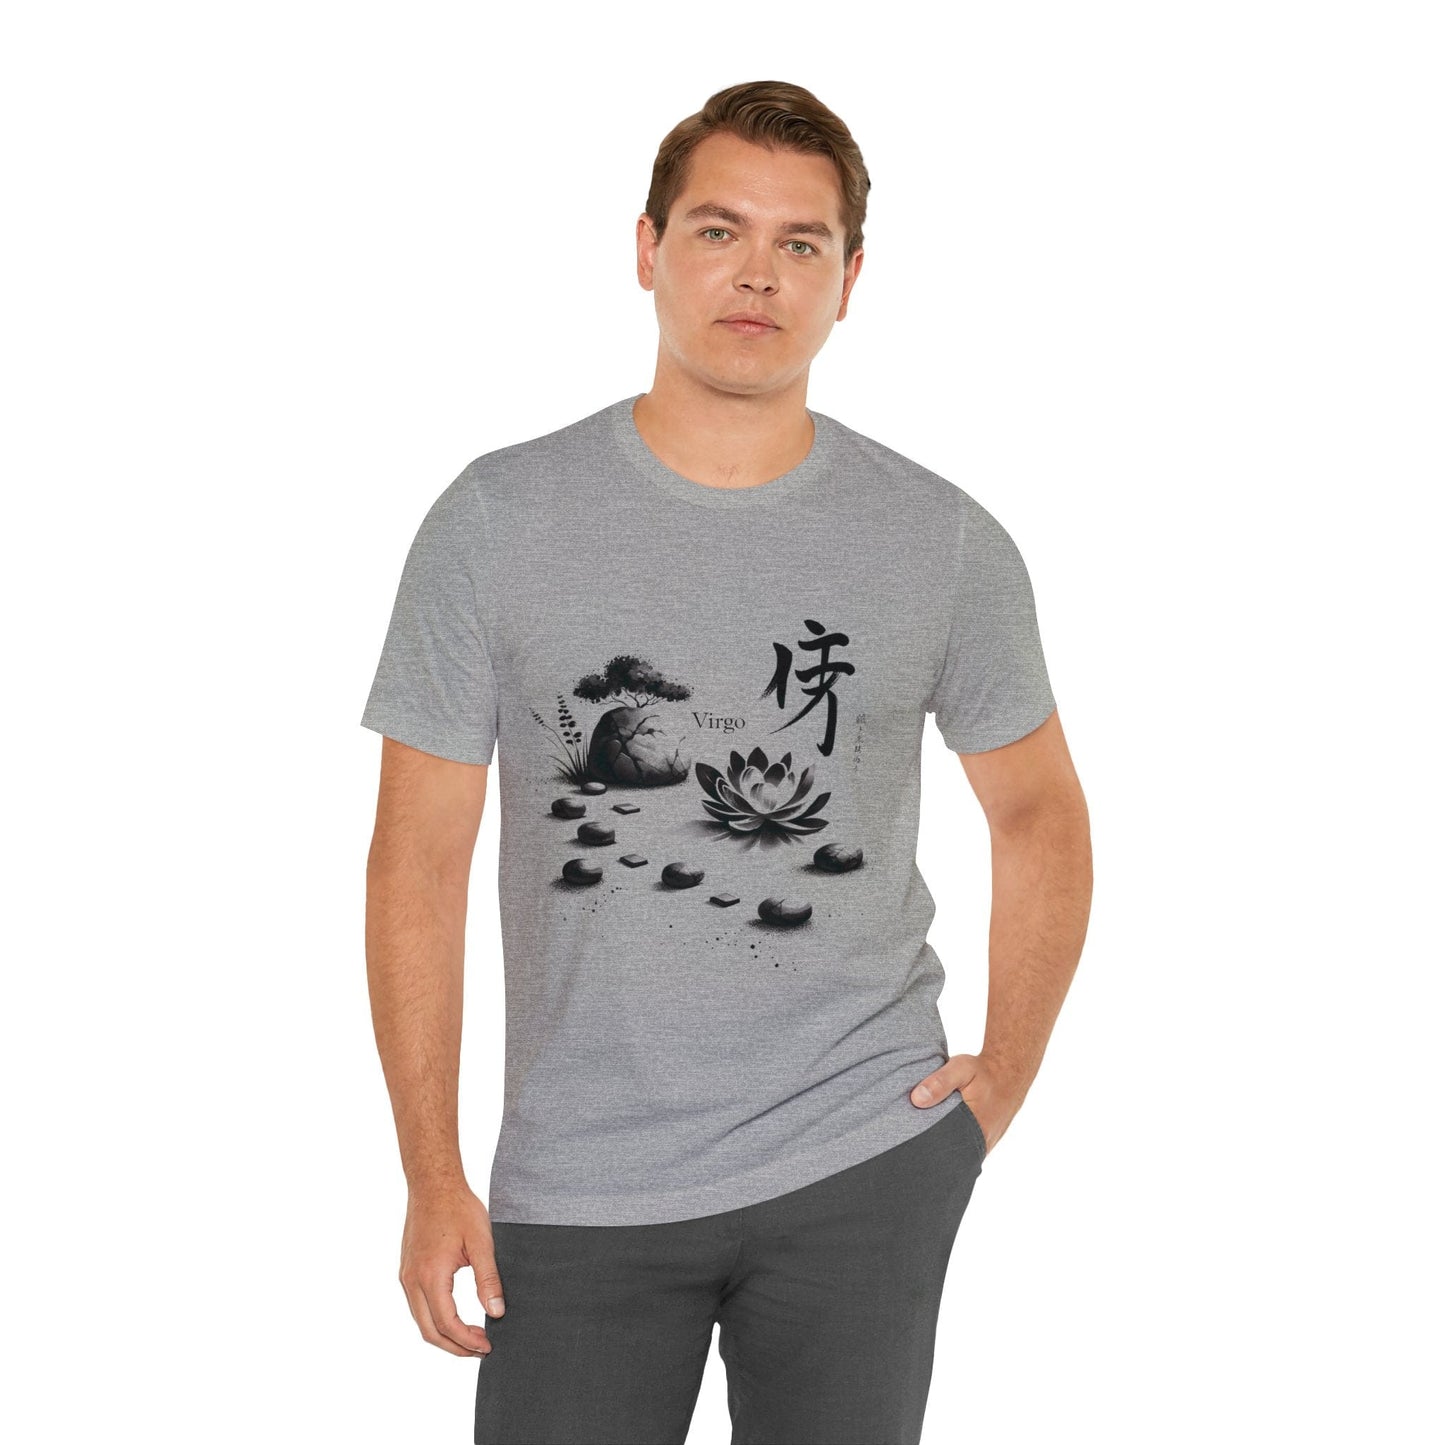 T-Shirt Zen Garden Path: Sumi-e Ink Wash Design Virgo T-Shirt